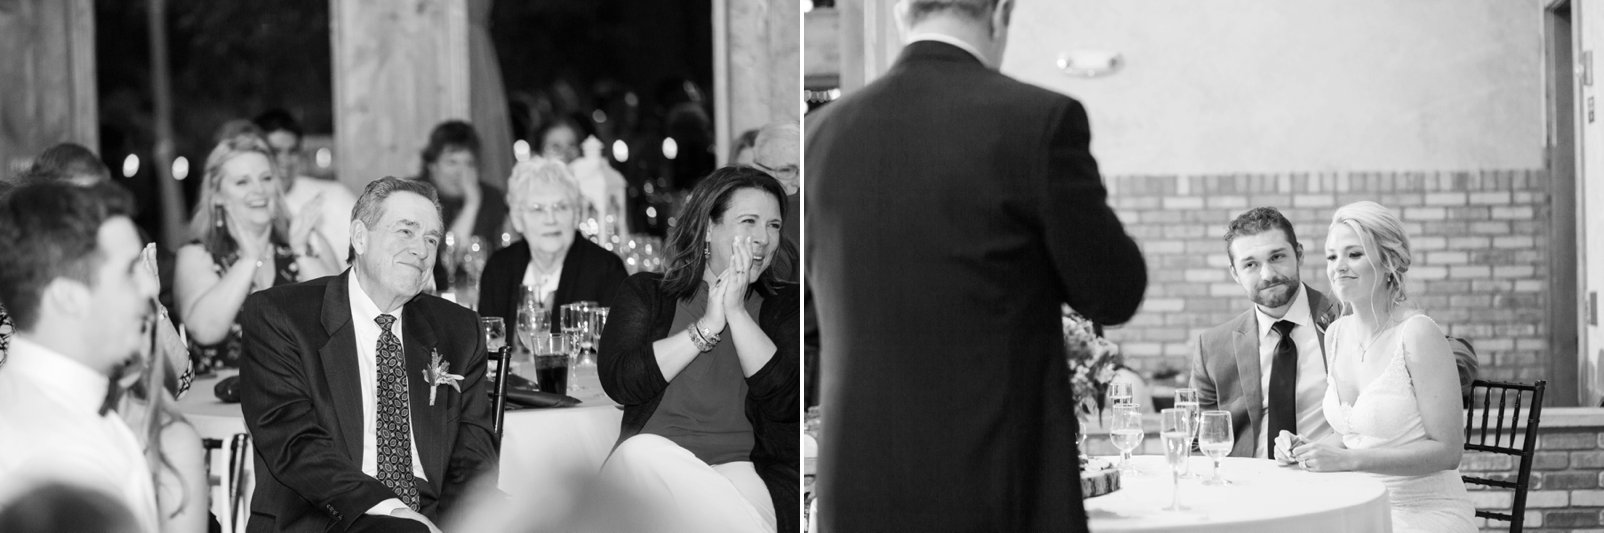 toasts during della terra wedding